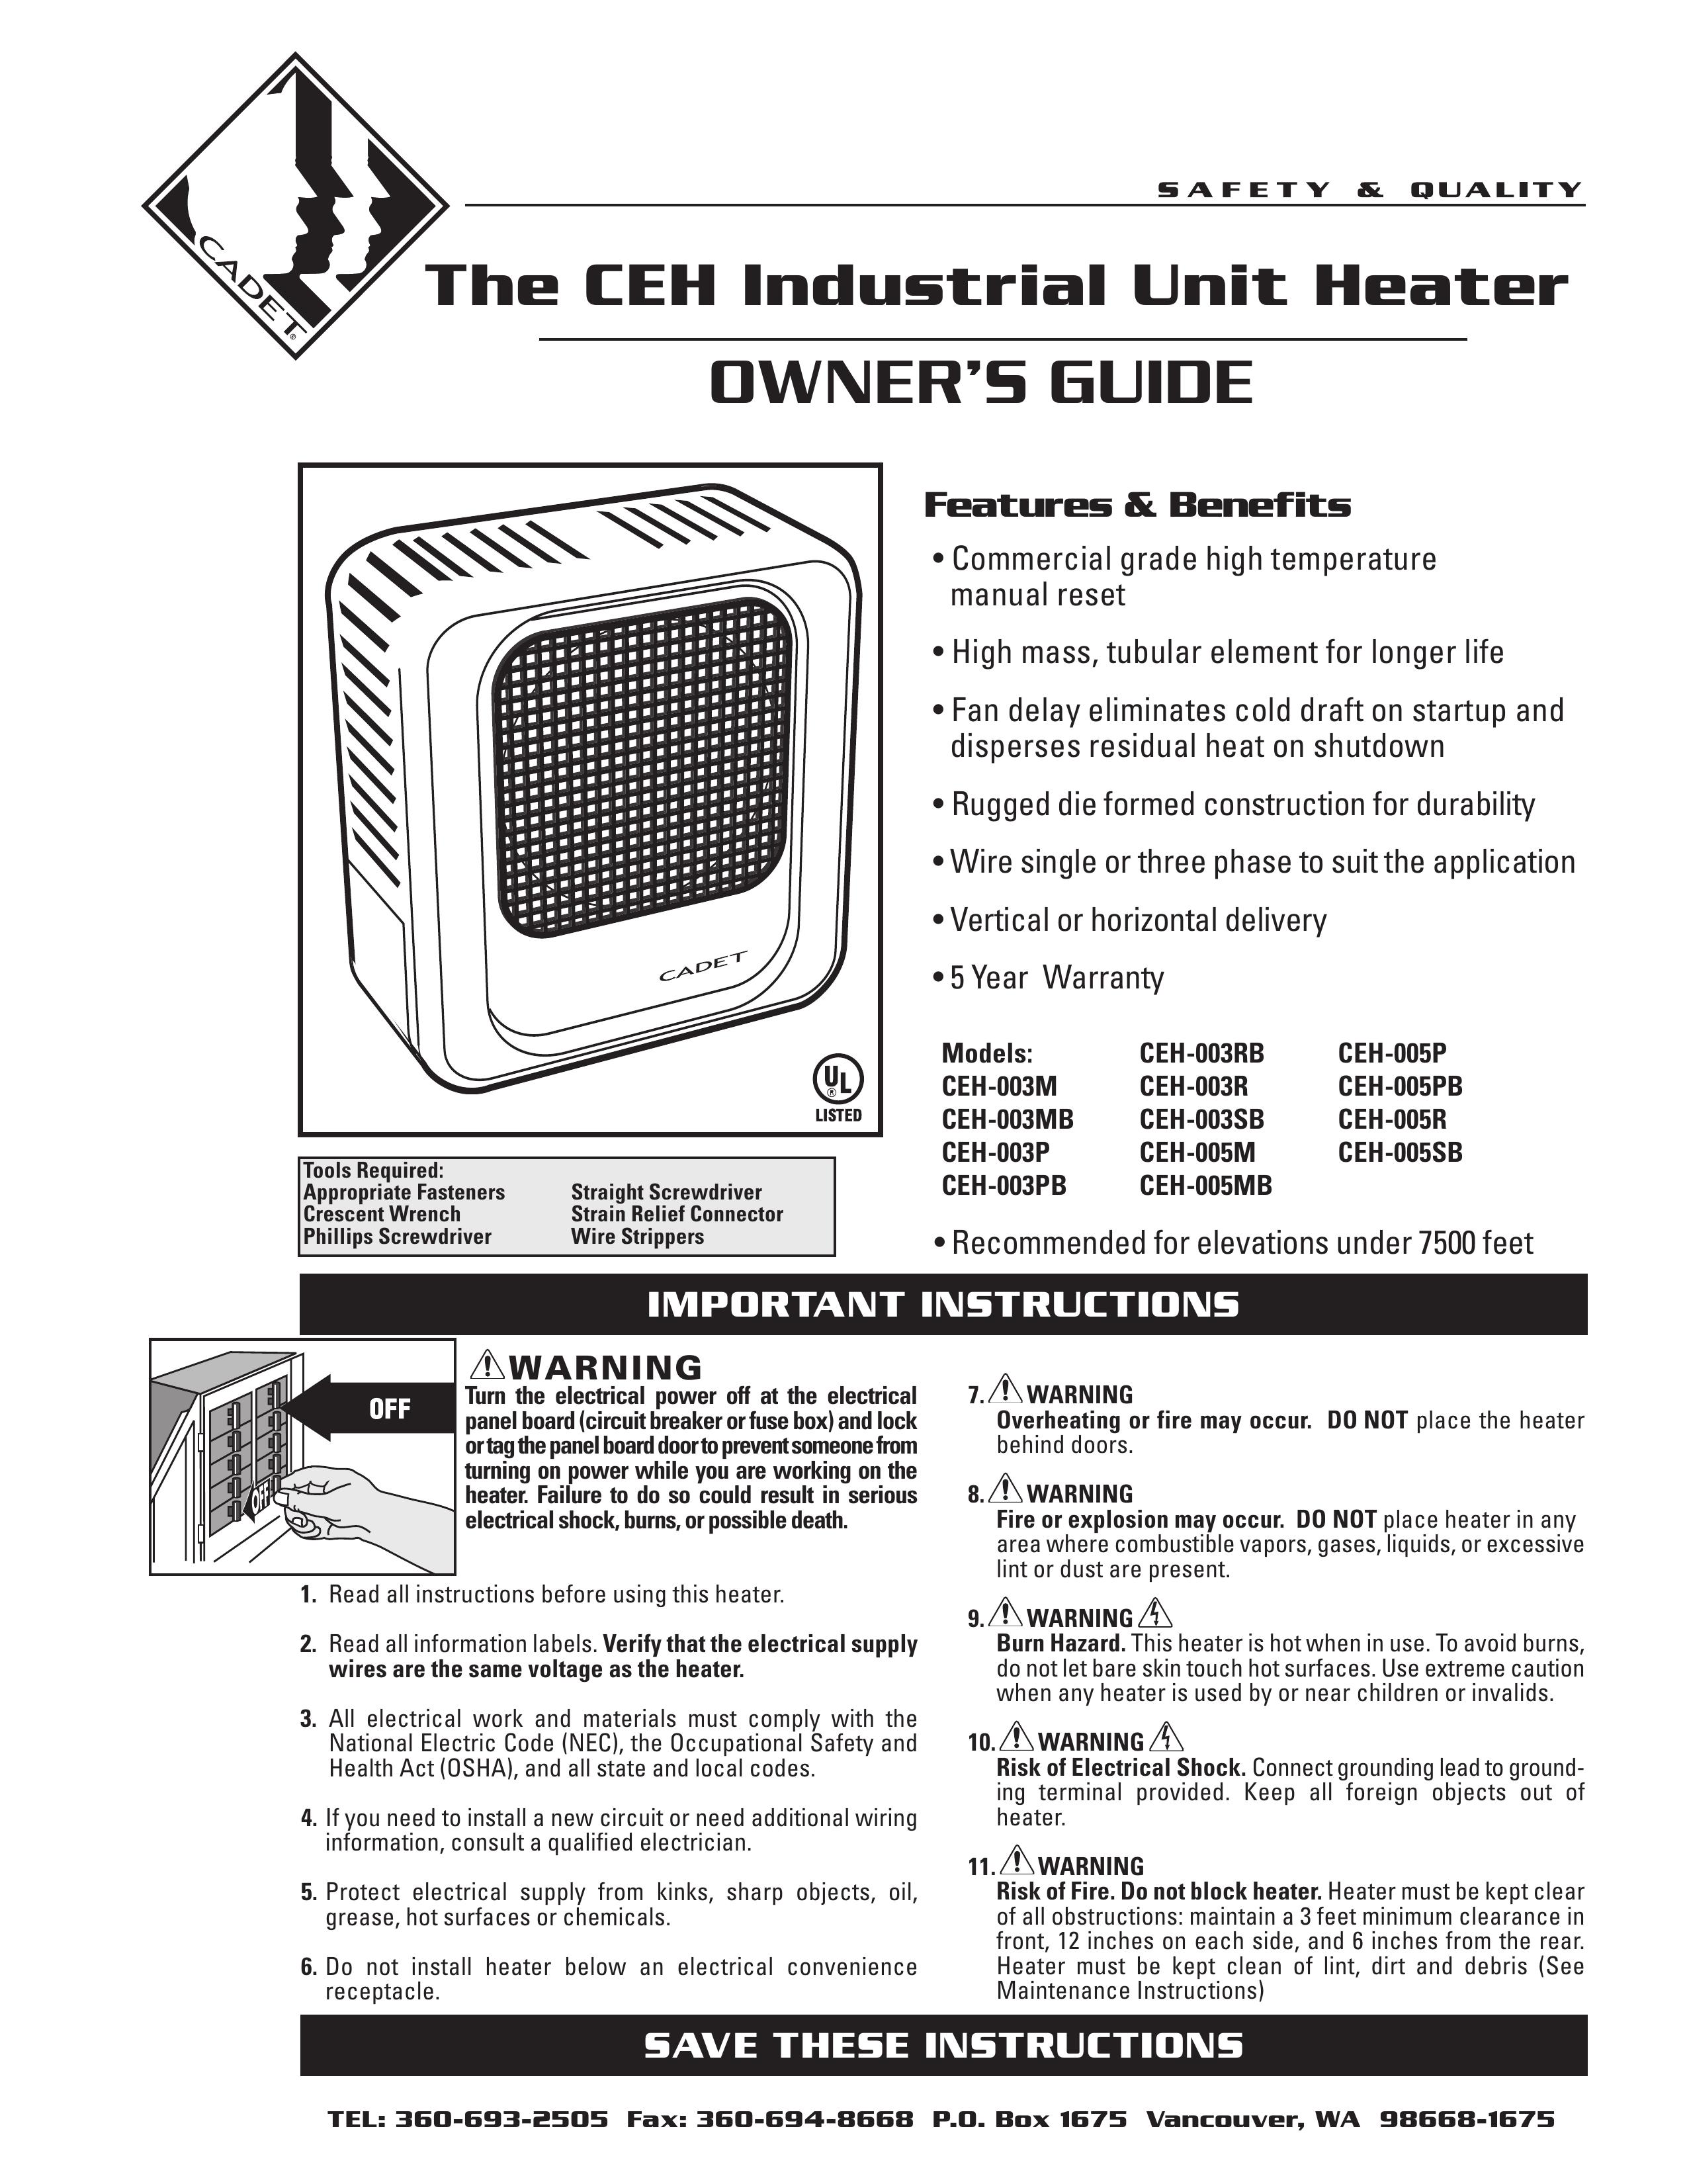 Cadet CEH-003MB Patio Heater User Manual